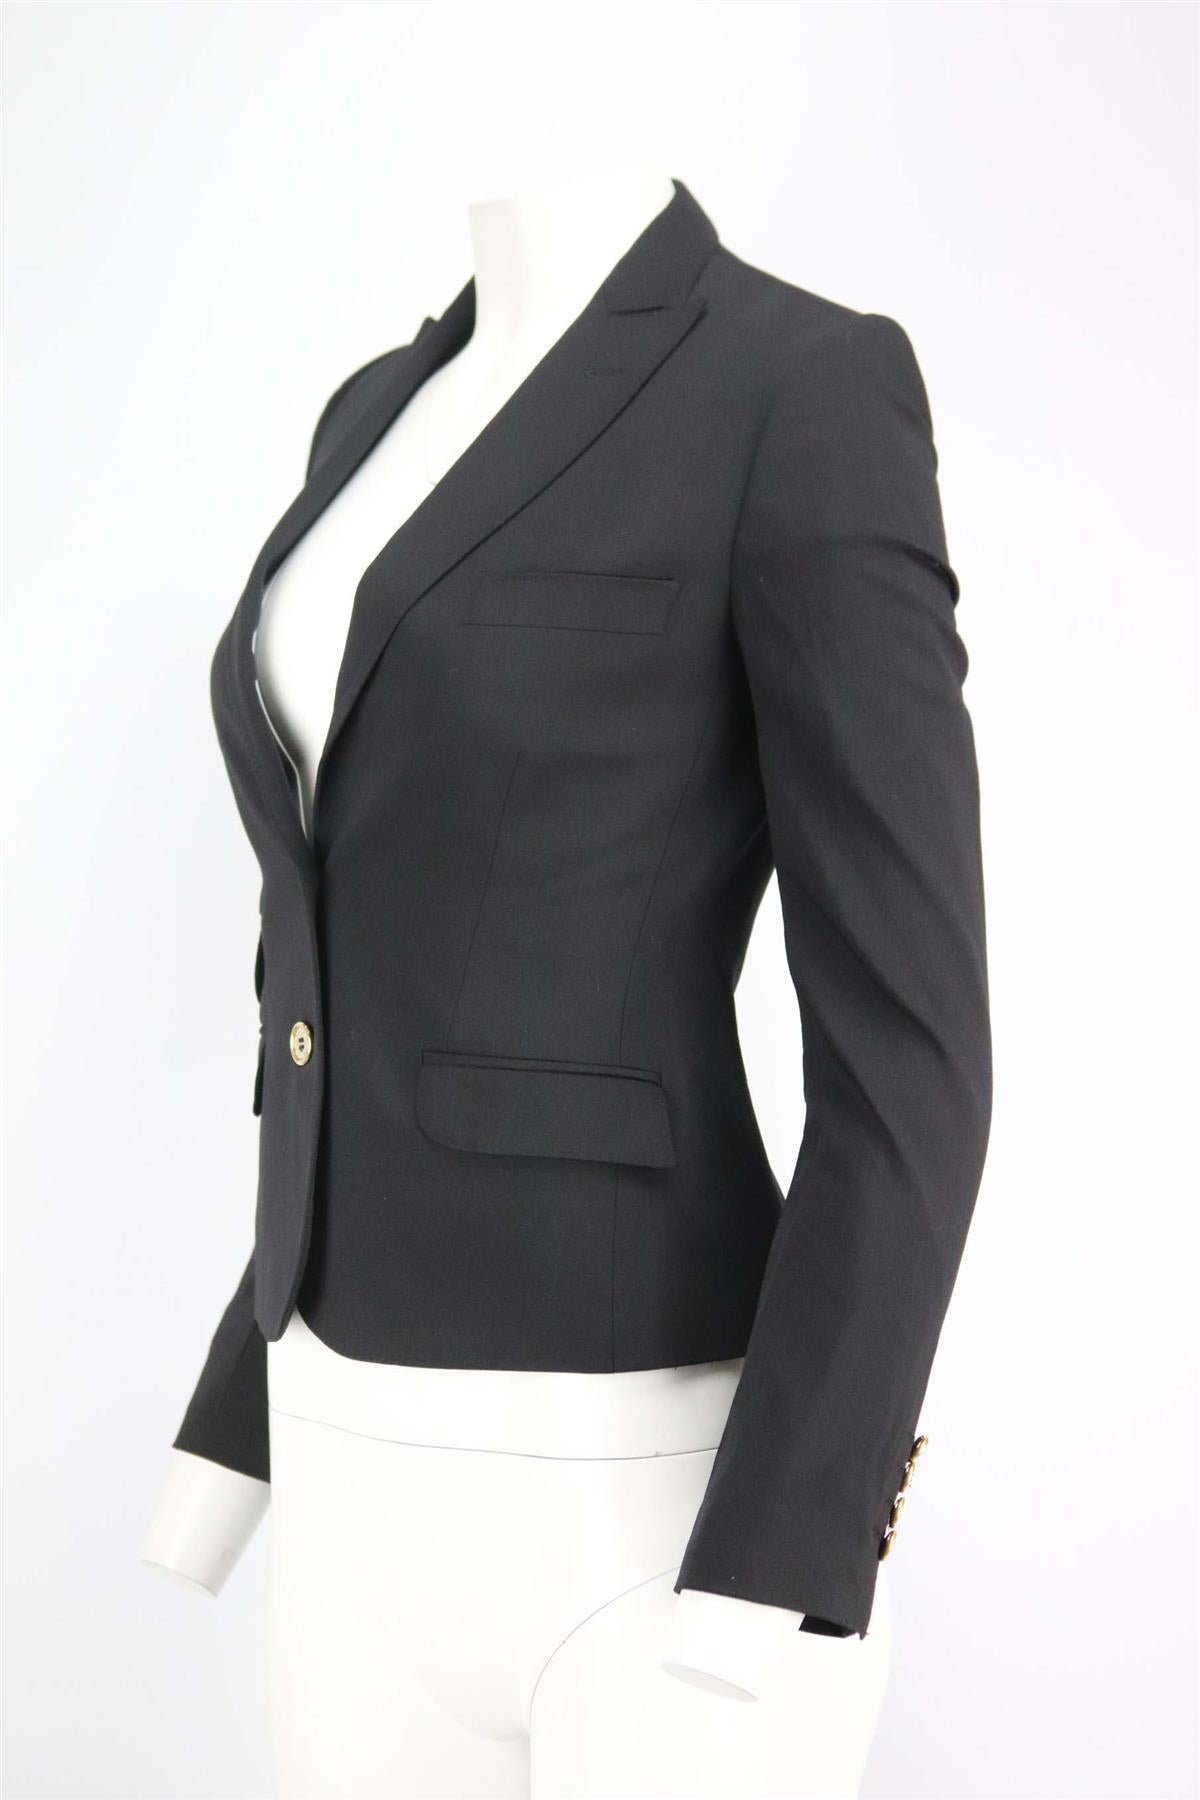 DOLCE & GABBANA Blazer Vest 2 Piece Blue Wool MARTINI s IT50 /US40/L RRP $2500 